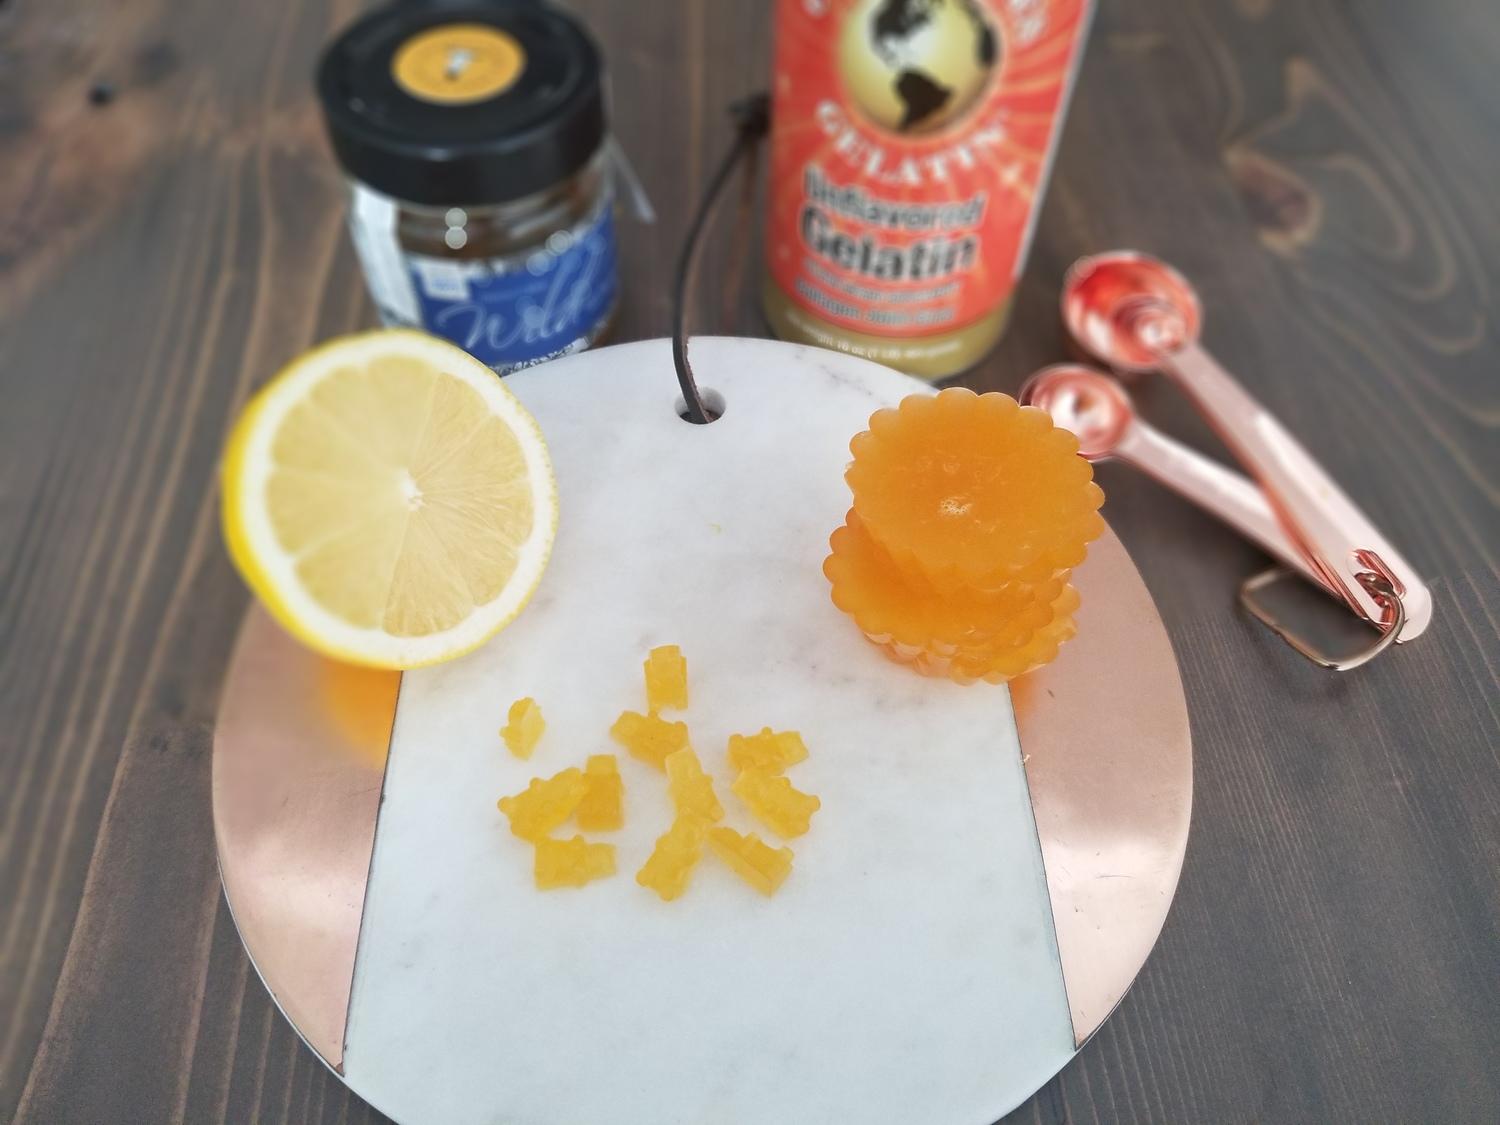 Natural Yummy Gummy Fruit Snacks - Lemon Gummy Bears July  9, 2018 One Health Services Etobicoke